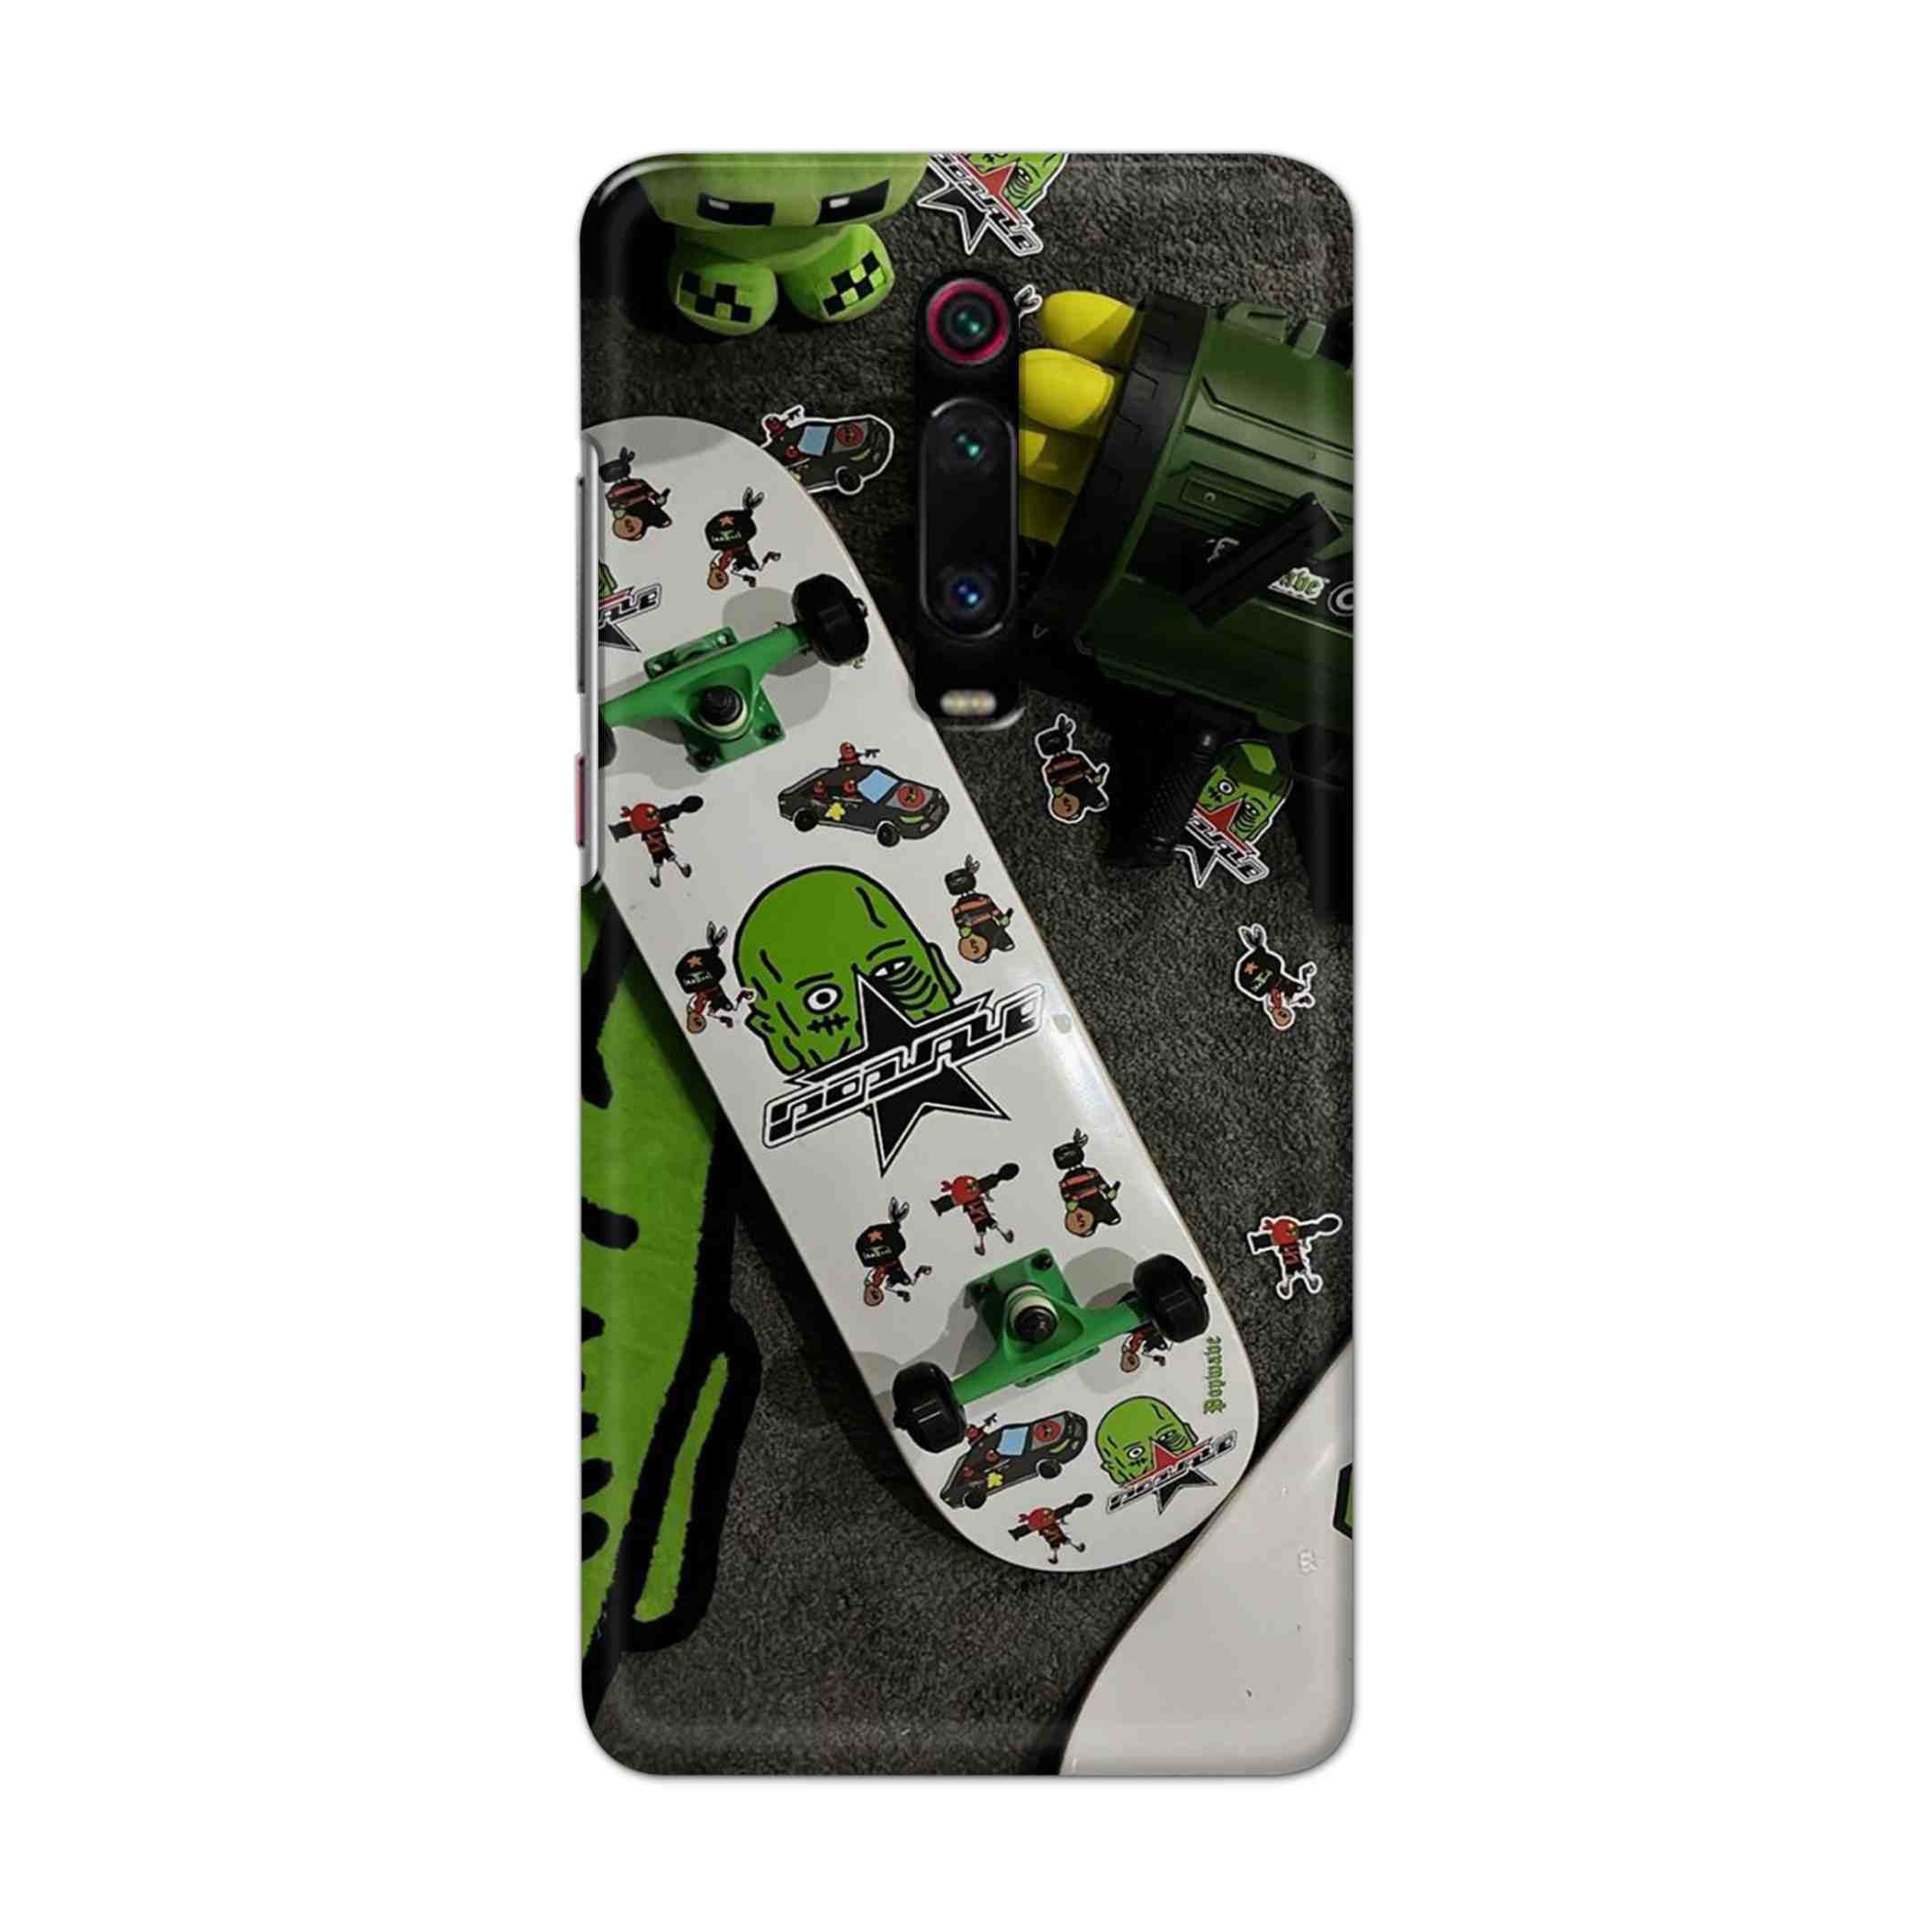 Buy Hulk Skateboard Hard Back Mobile Phone Case Cover For Xiaomi Redmi K20 Online